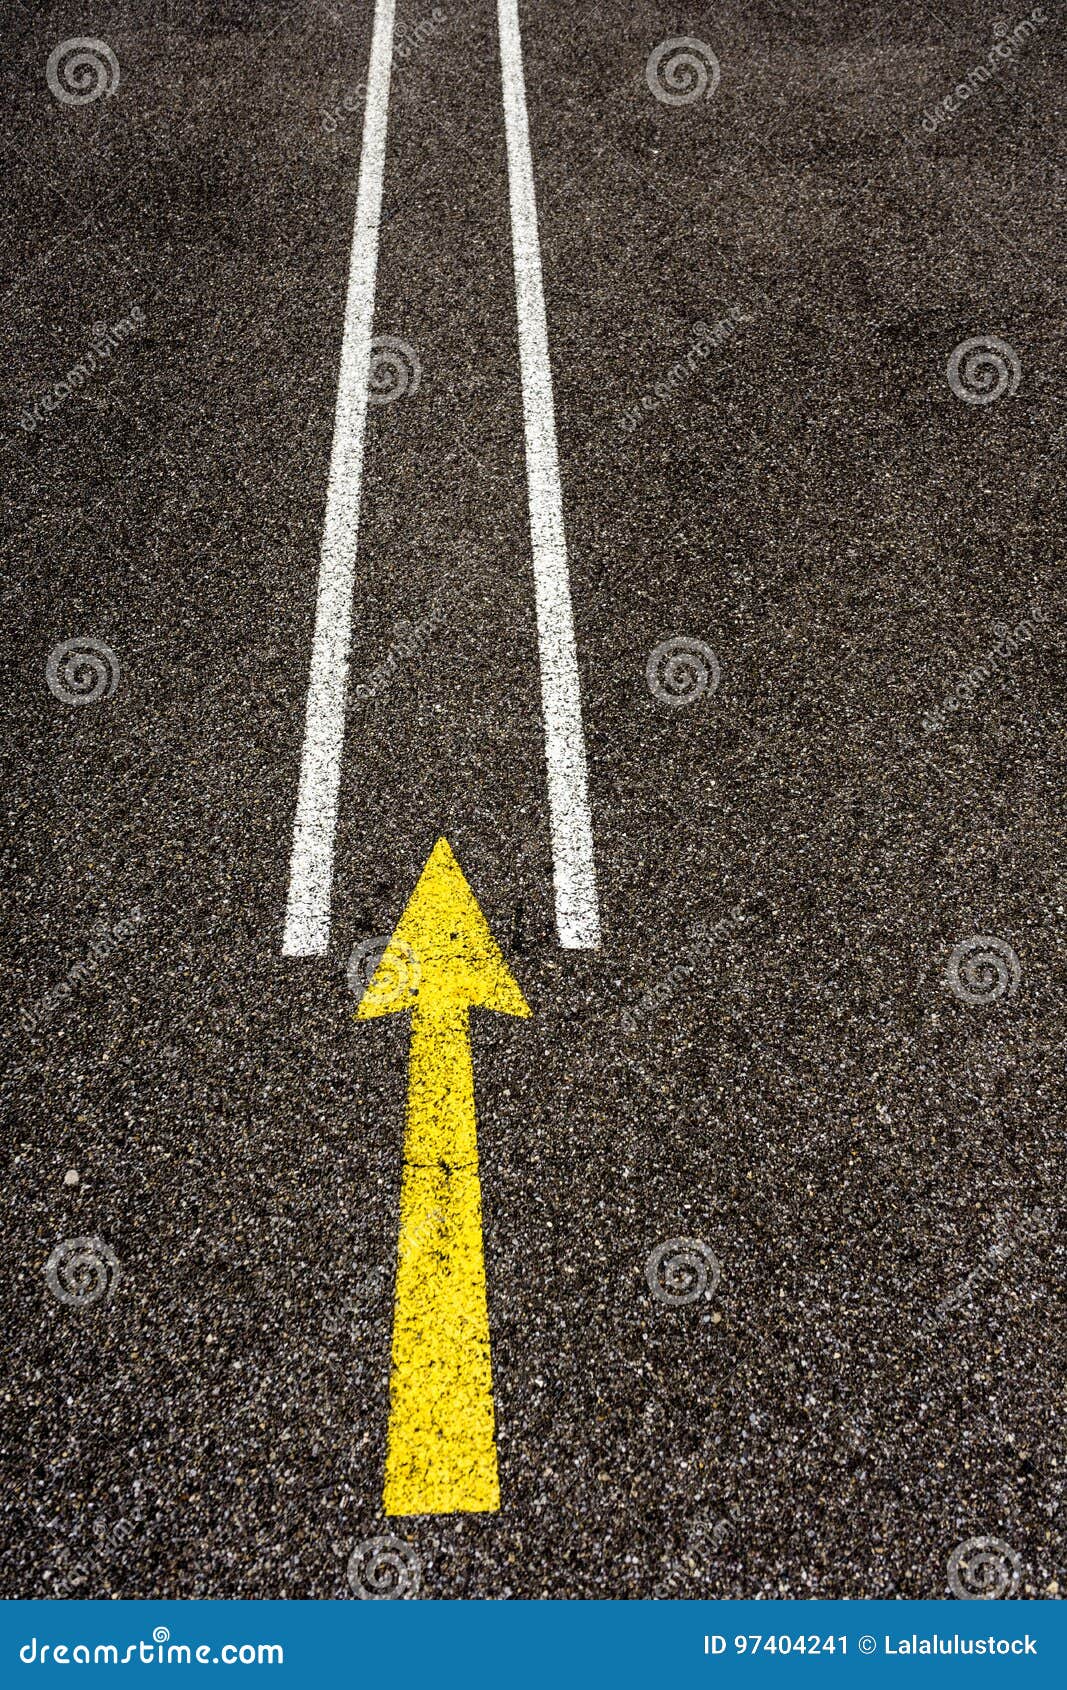 Yellow arrow street sign stock image. Image of caution - 97404241